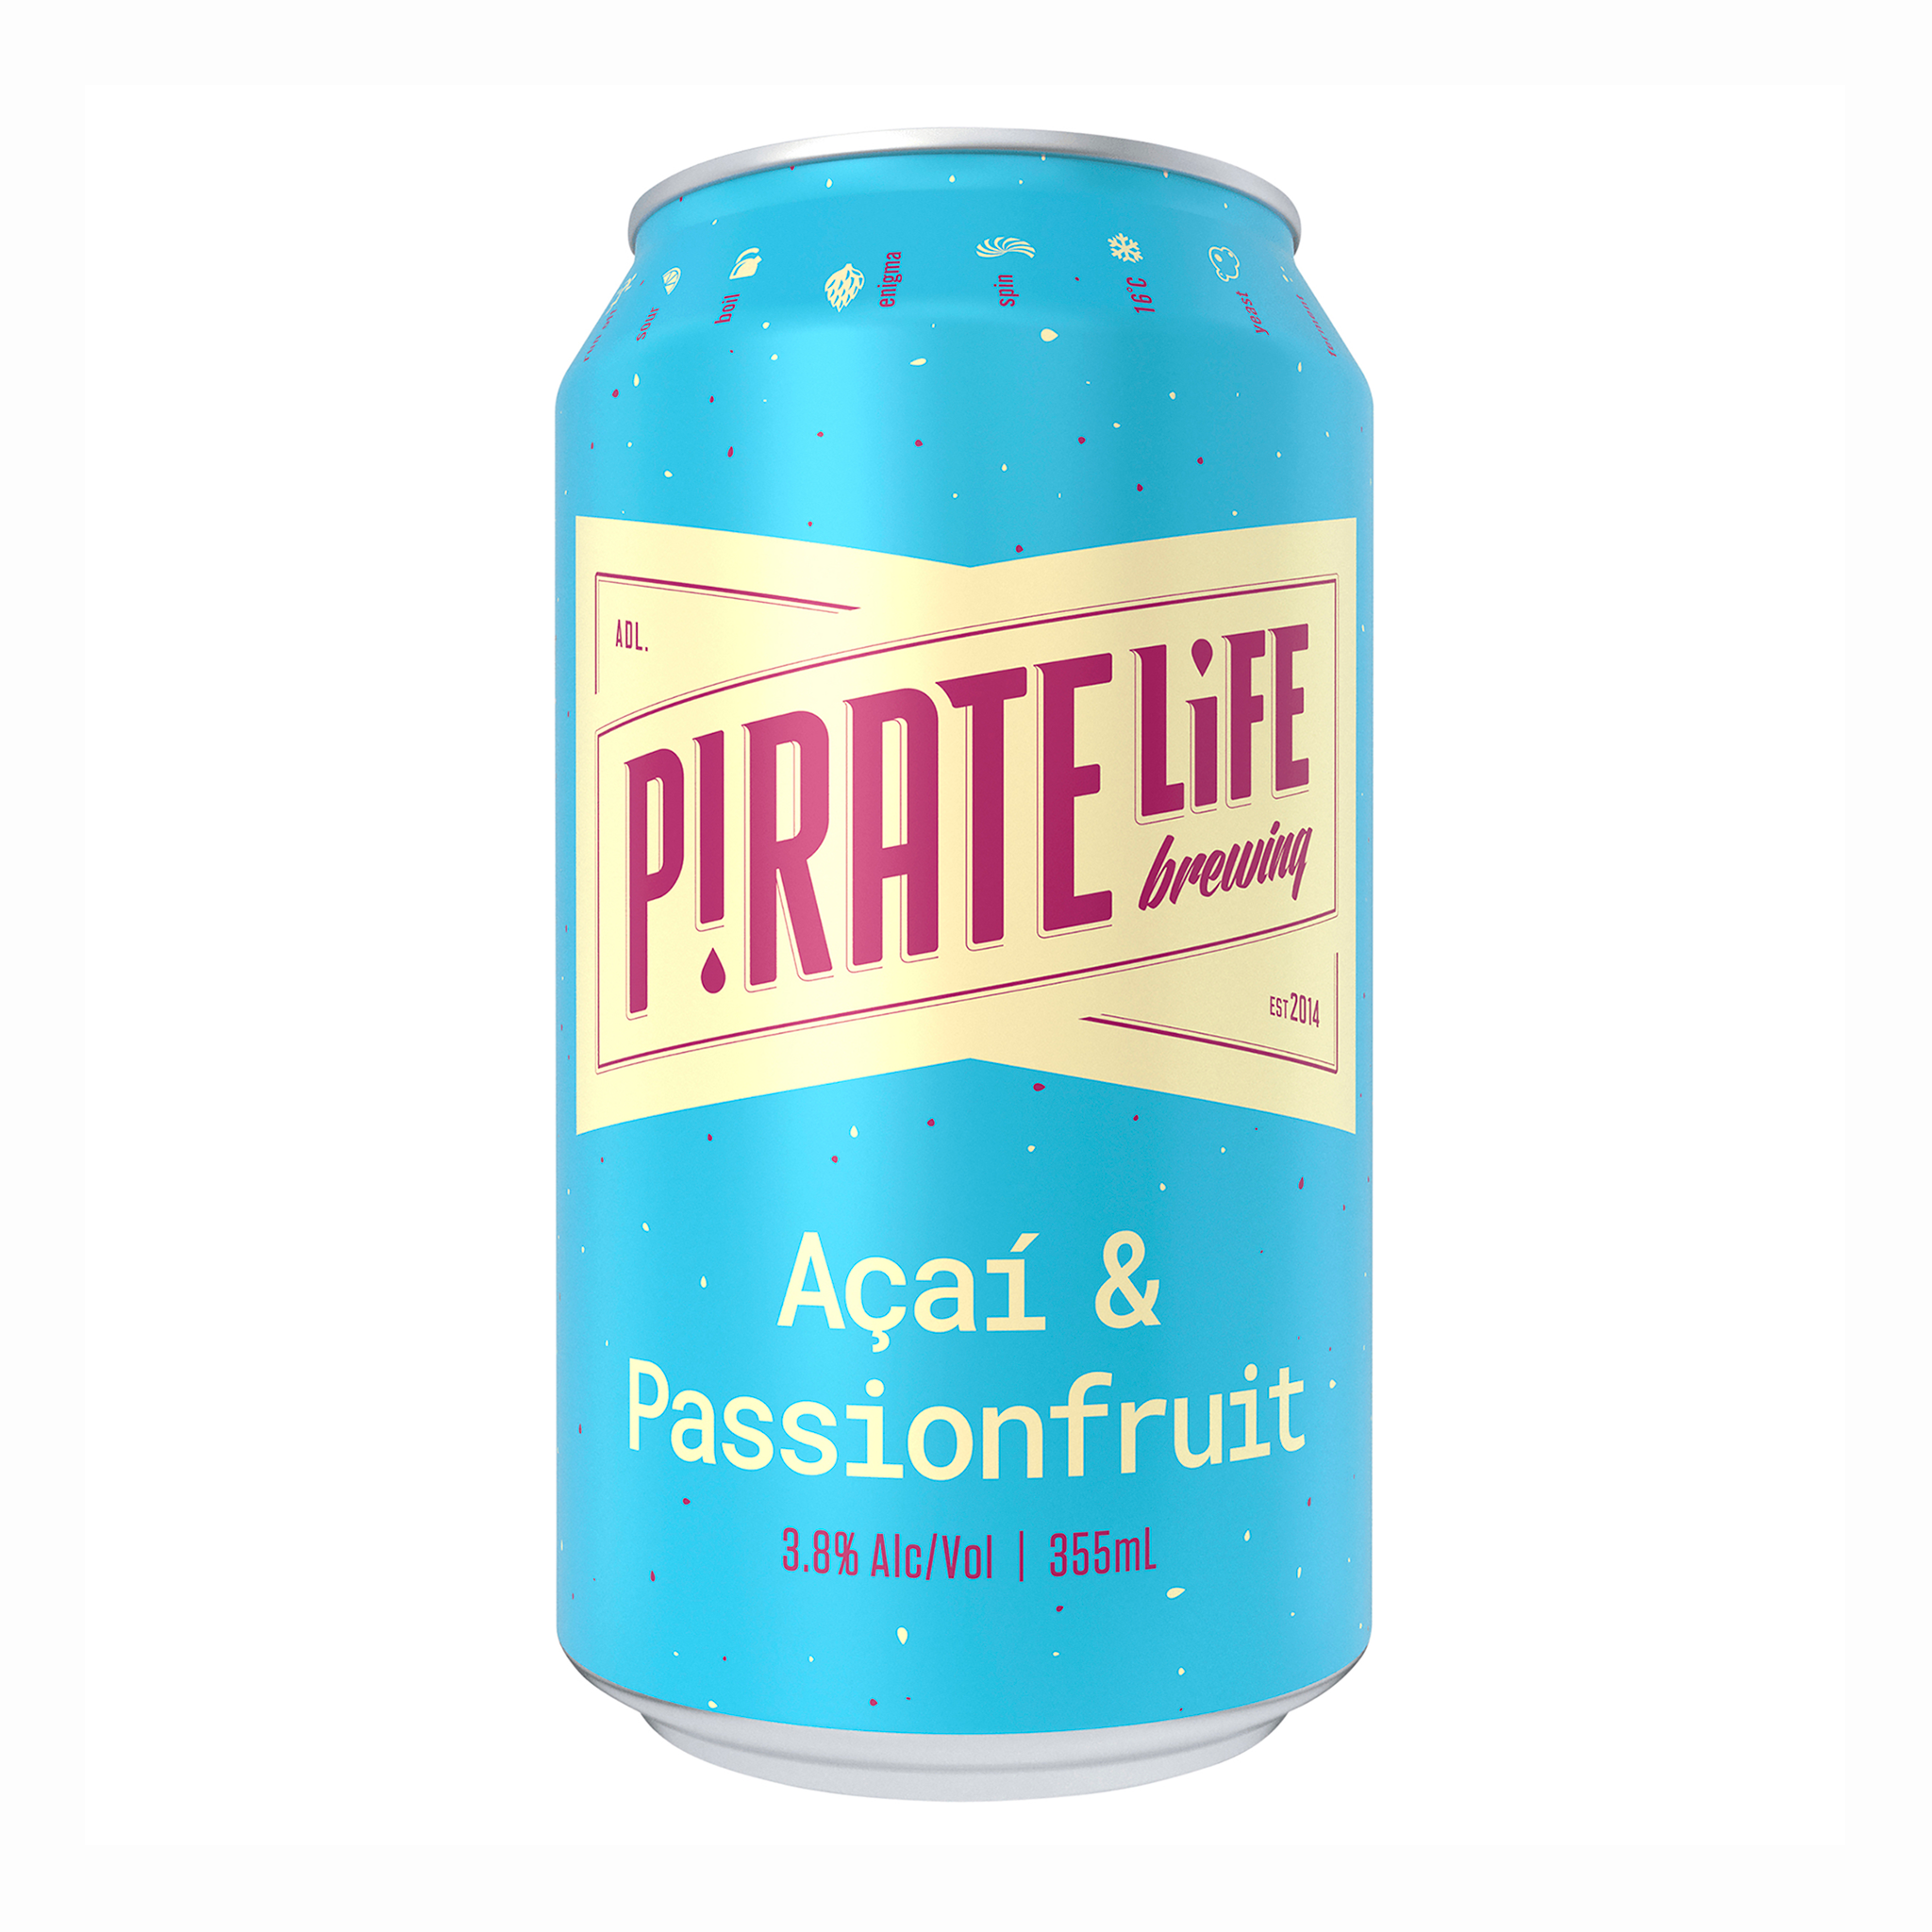 Pirate Life Brewing Acai & Passionfruit (Case)